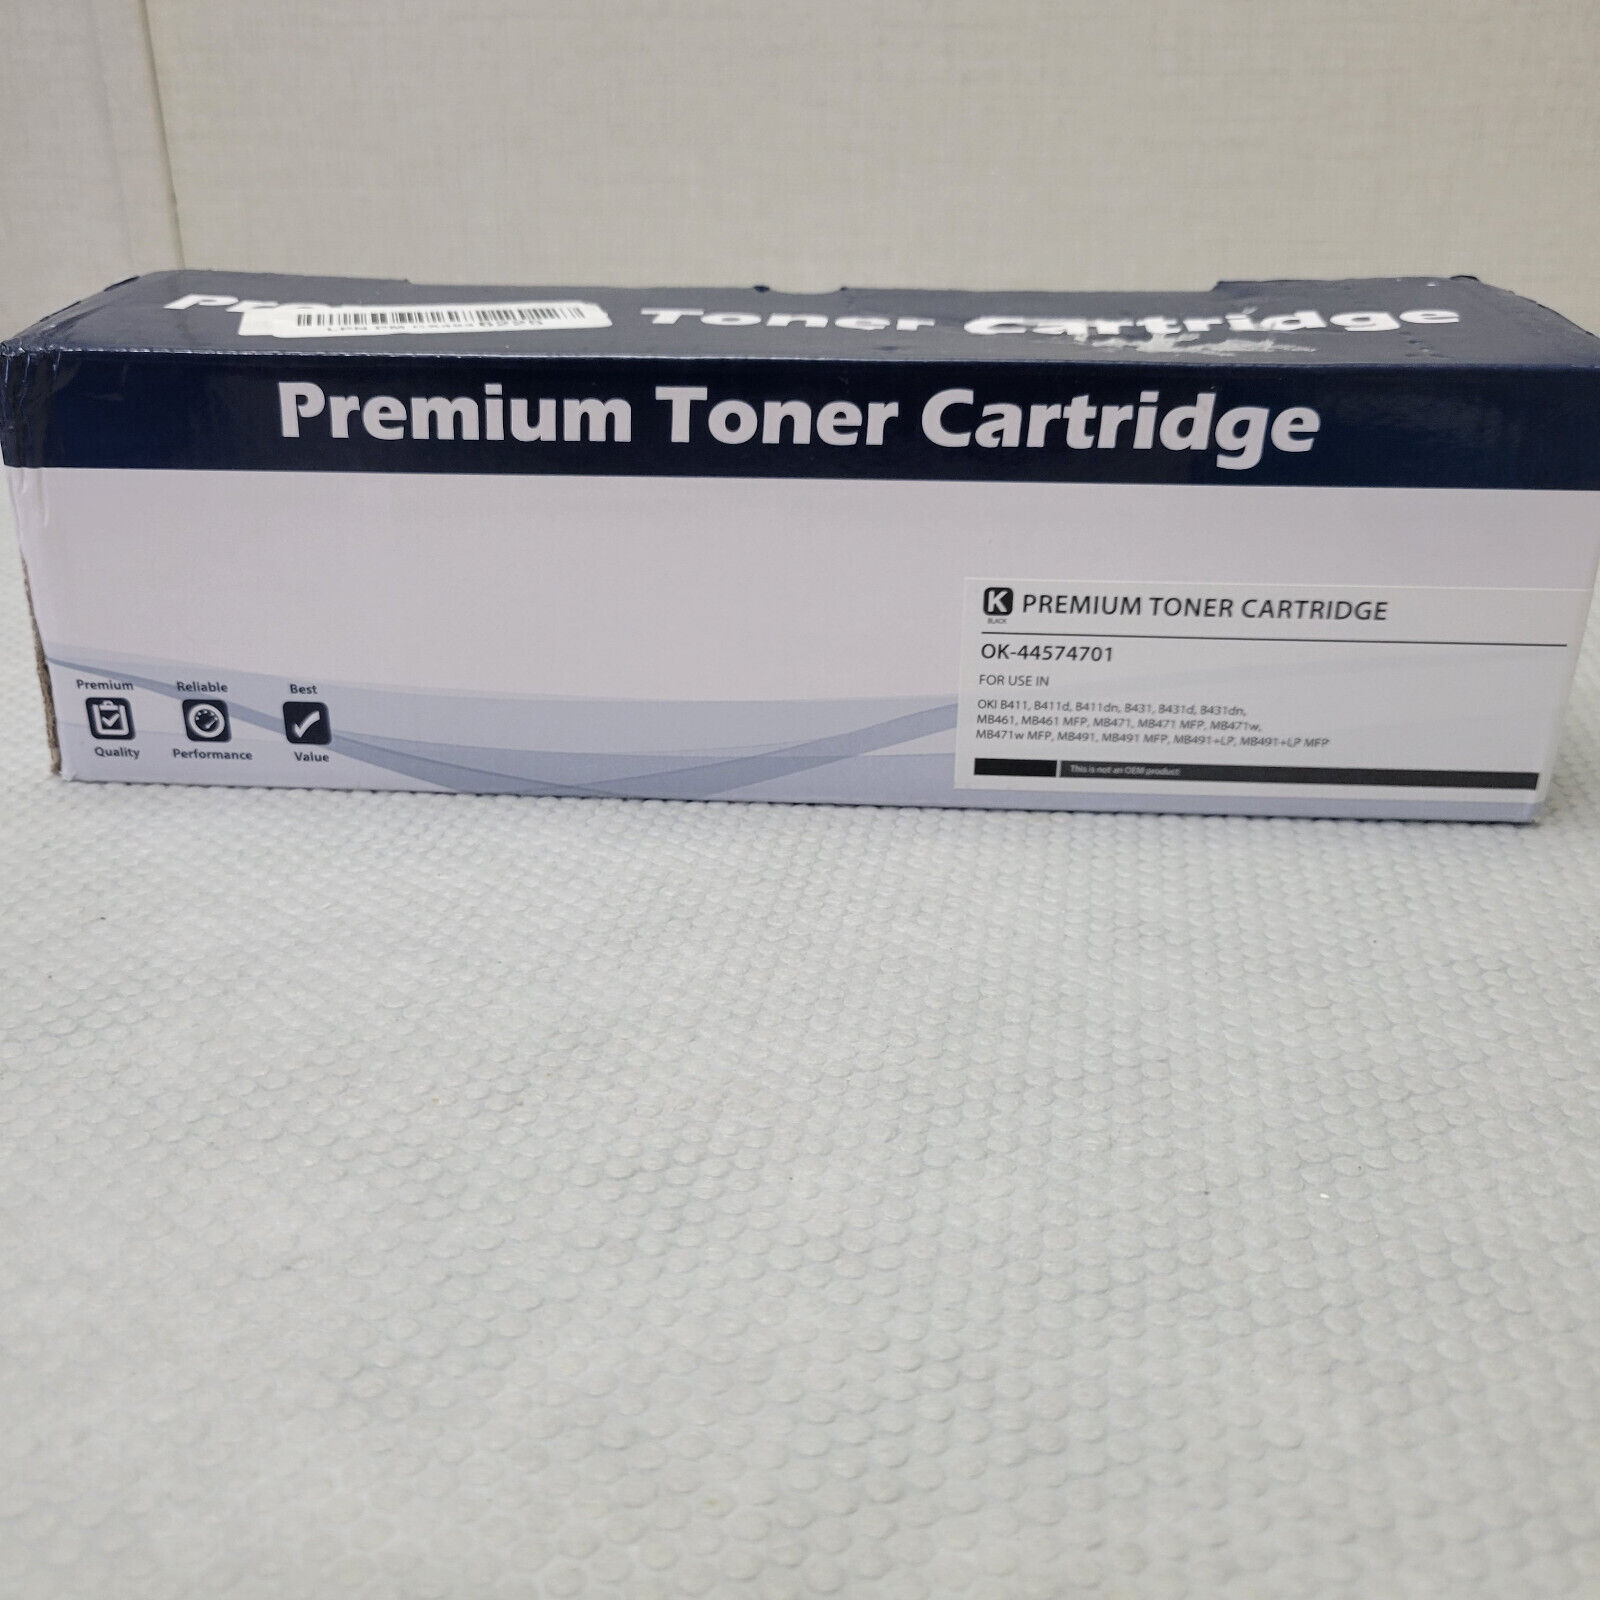 Premium Toner Cartridge Black For Okidata B411d/B411dn/B431d/B431dn p/n 44574701